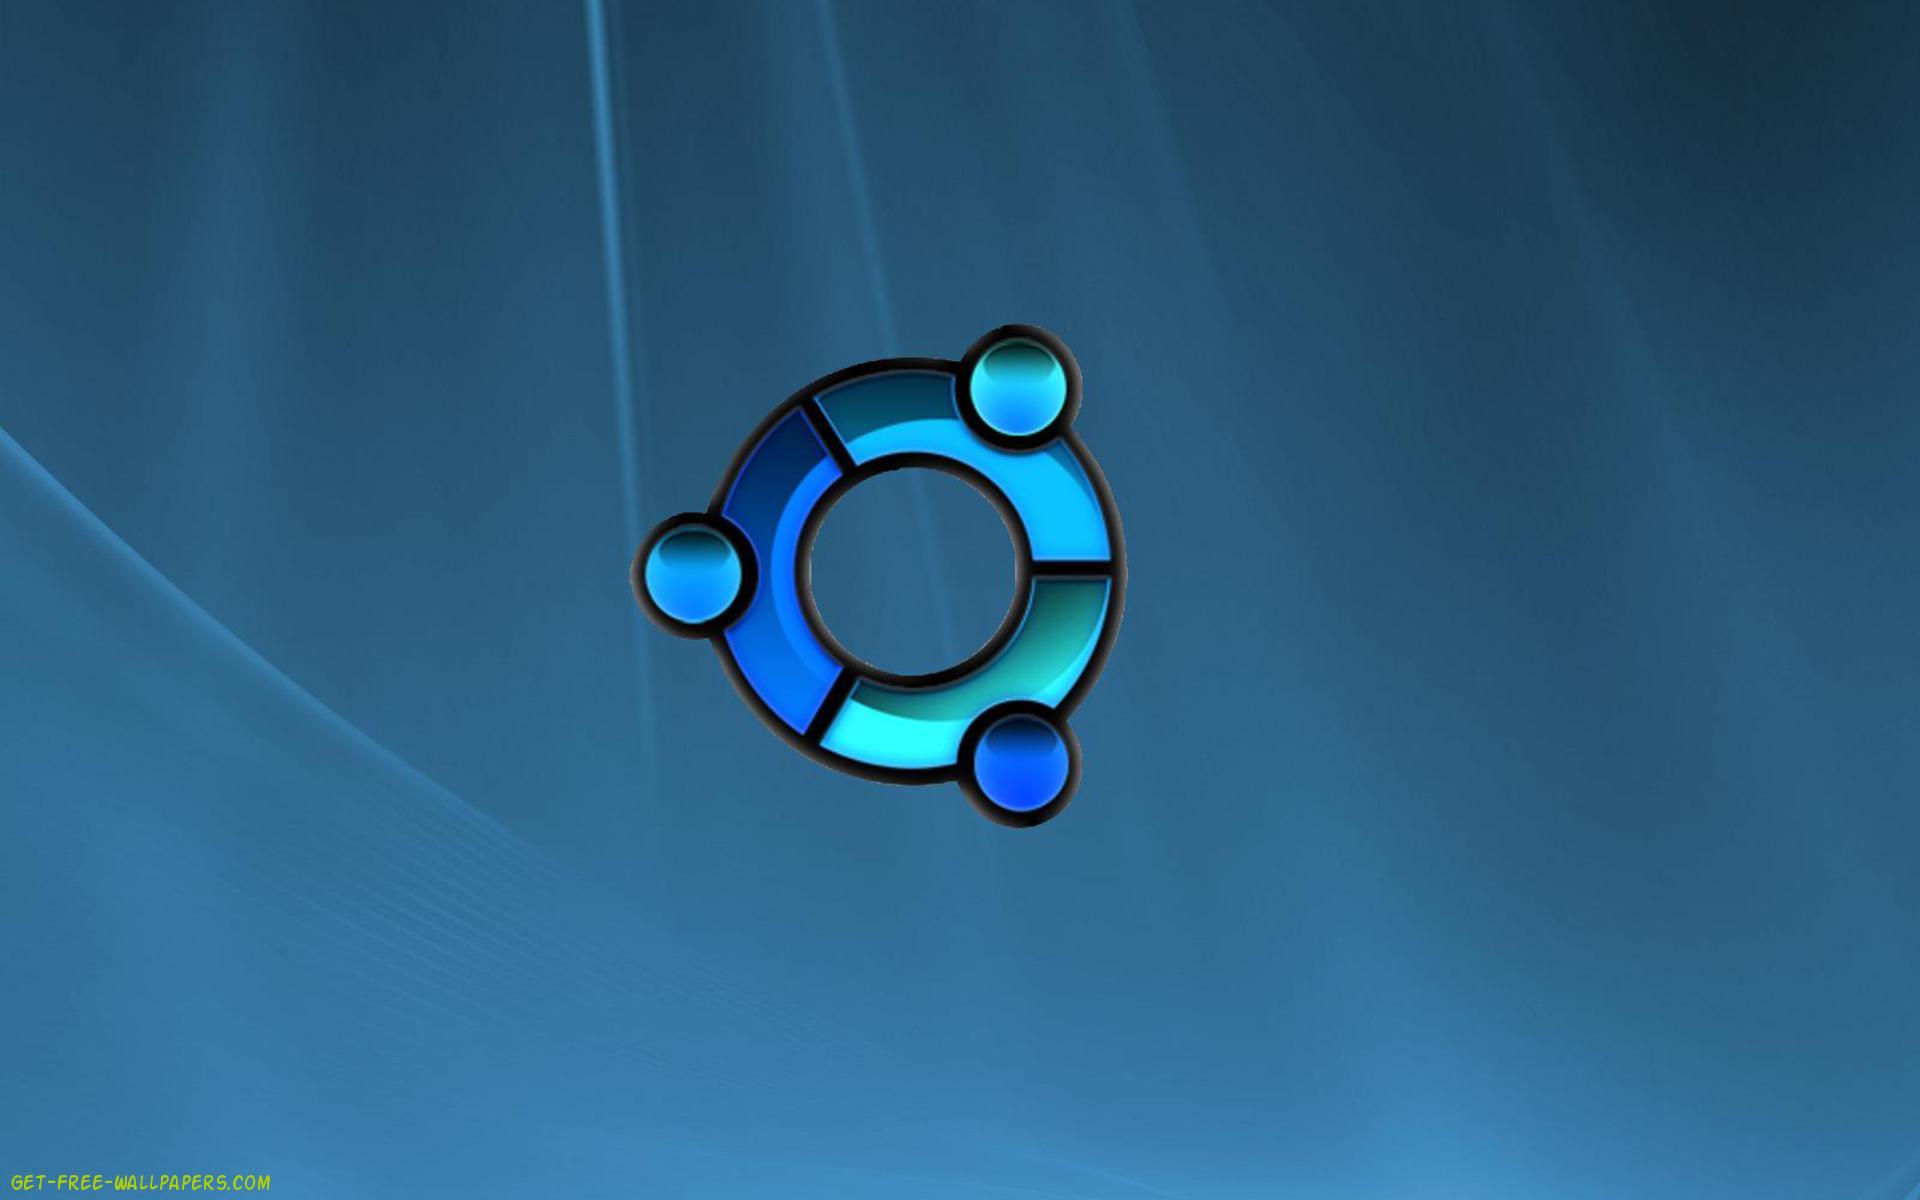 Ubuntu Vista Blue Technology Wallpaper - HD Wallpapers Download